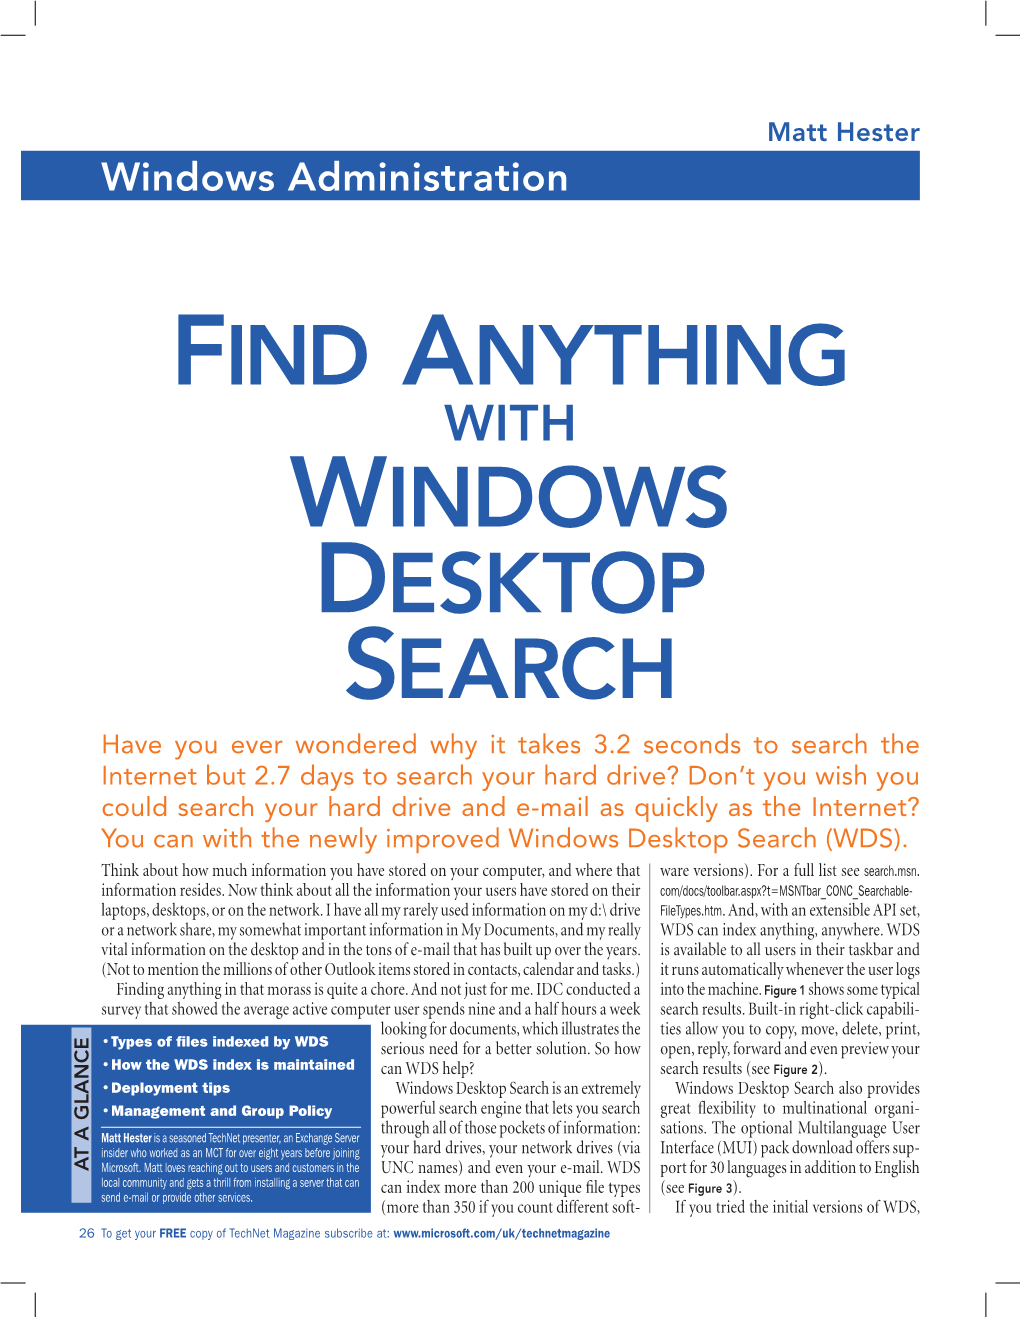 Find Anything Windows Desktop Search